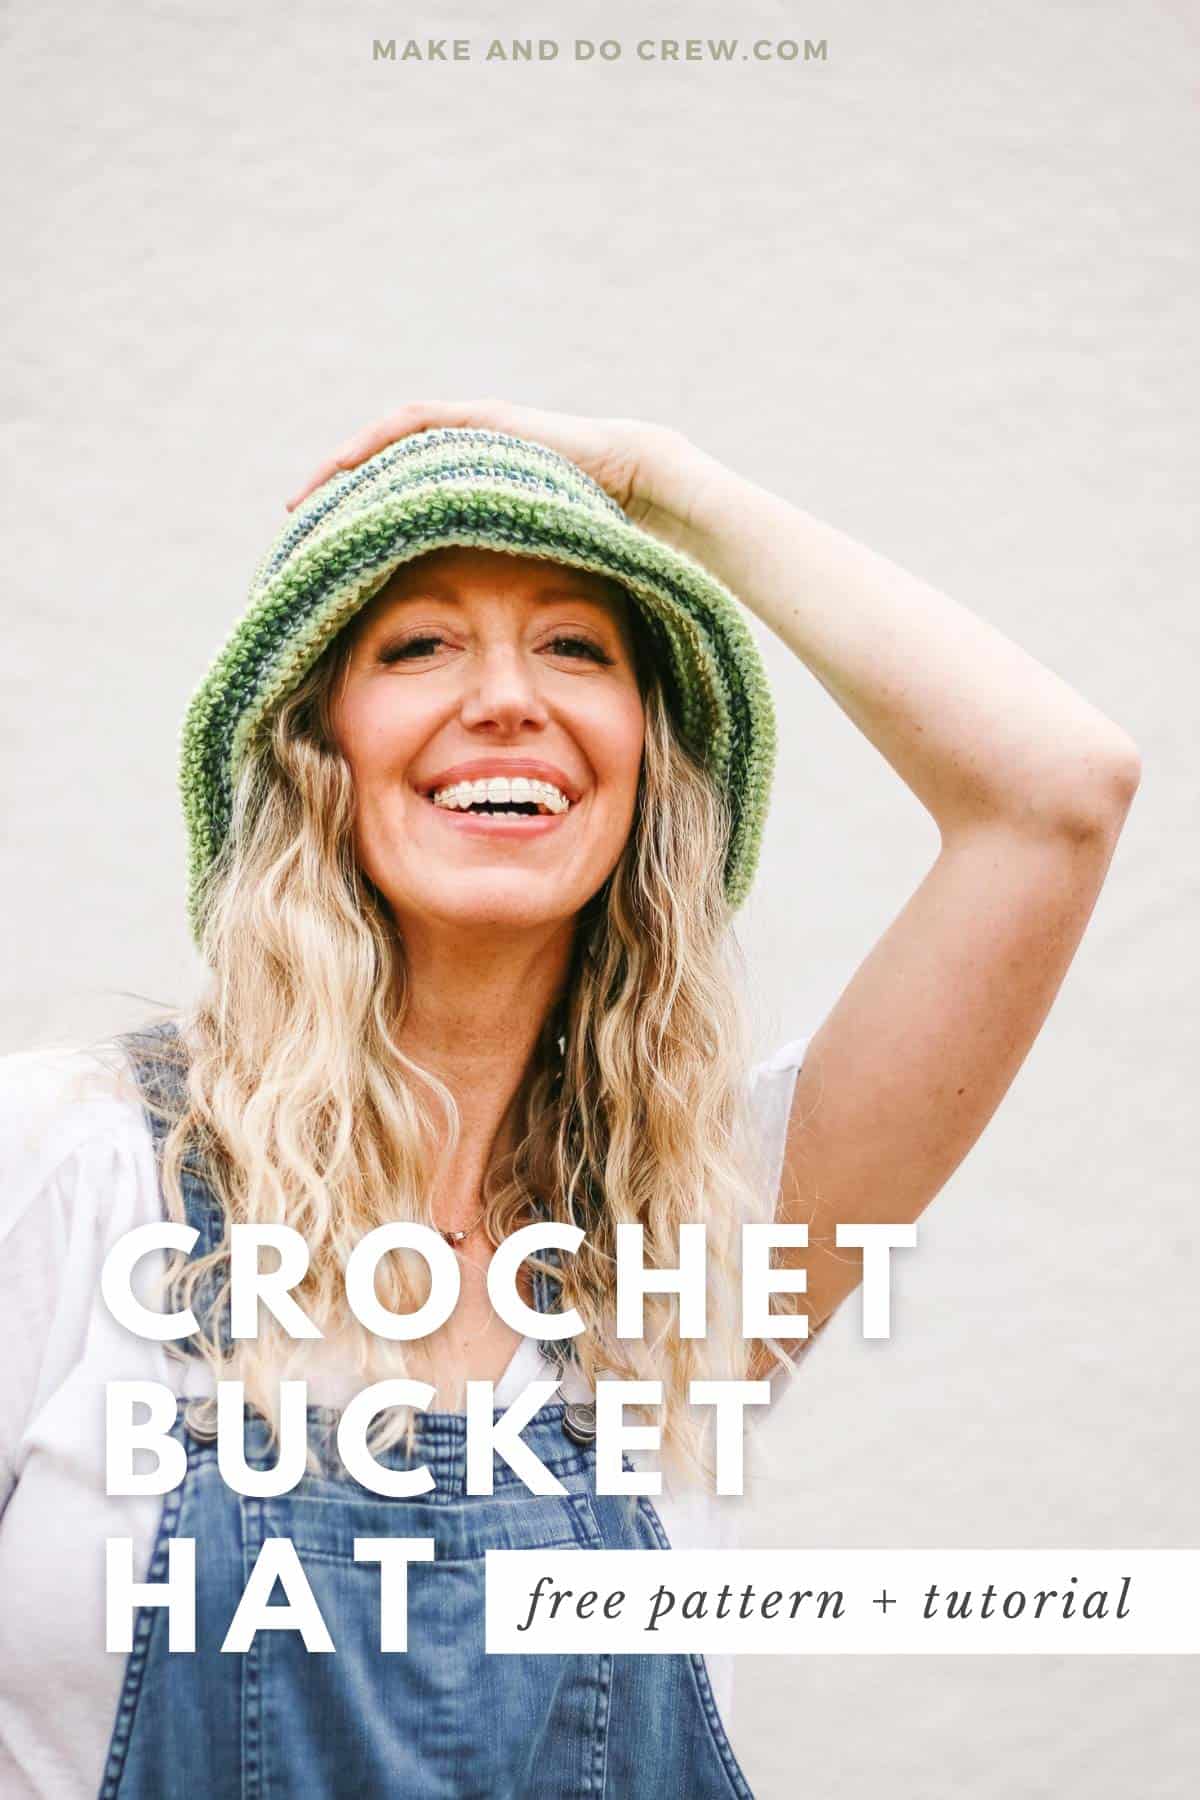  2. Scrappy Crochet Bucket Hat